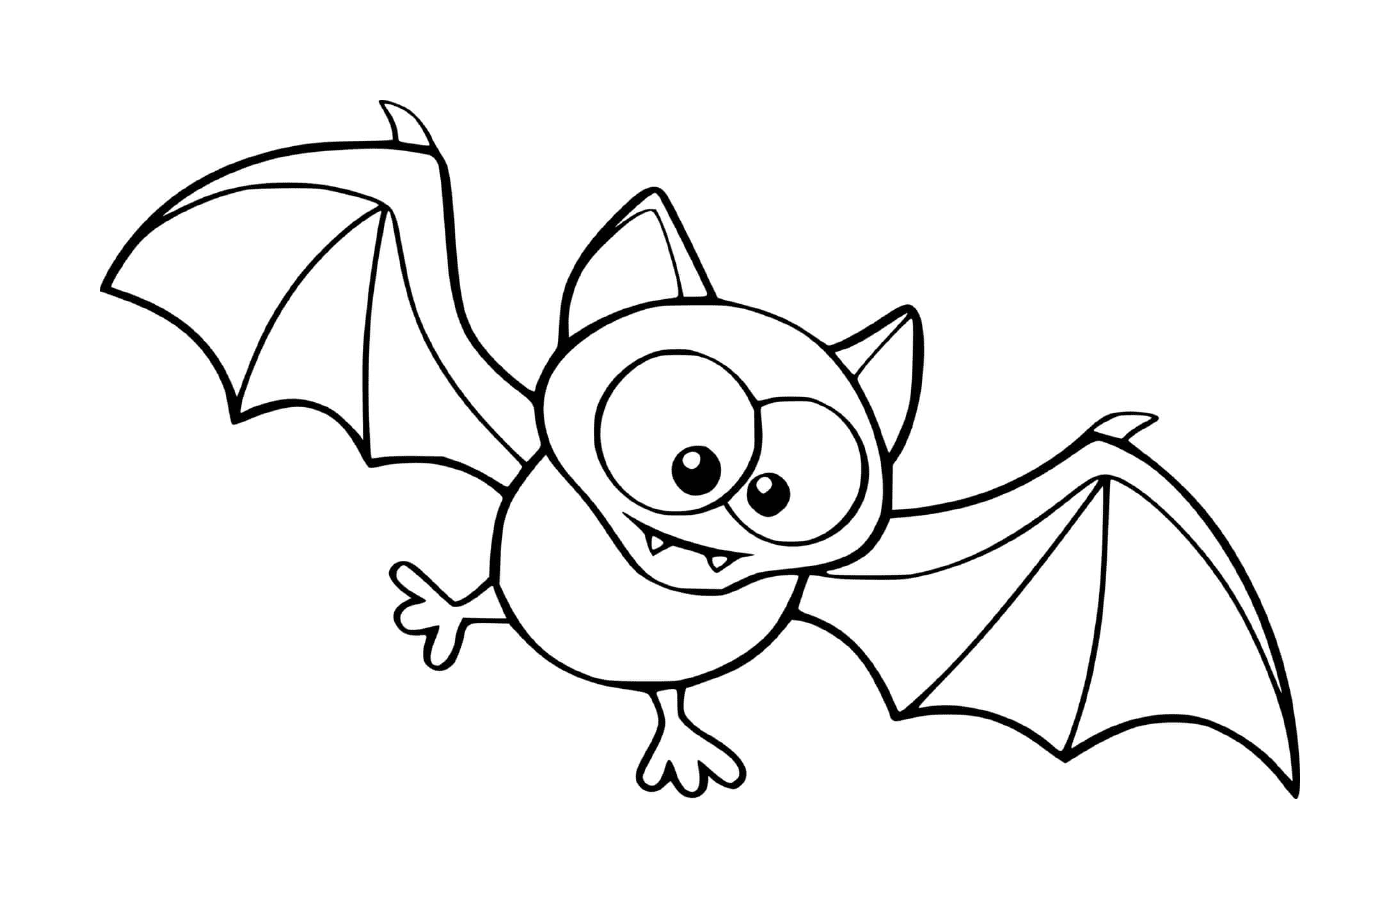  bat in simple cartoon version in mid-flight 